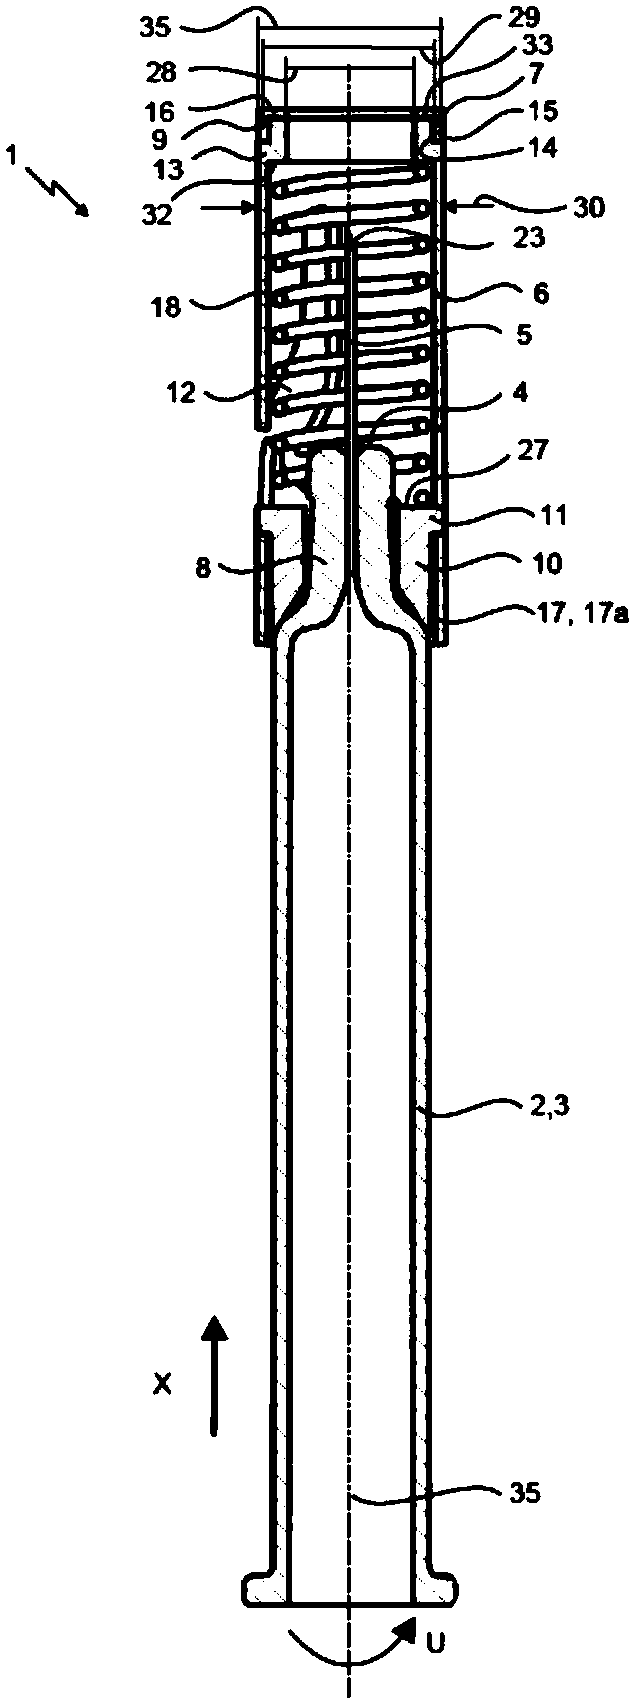 Multi-part safety device for syringe